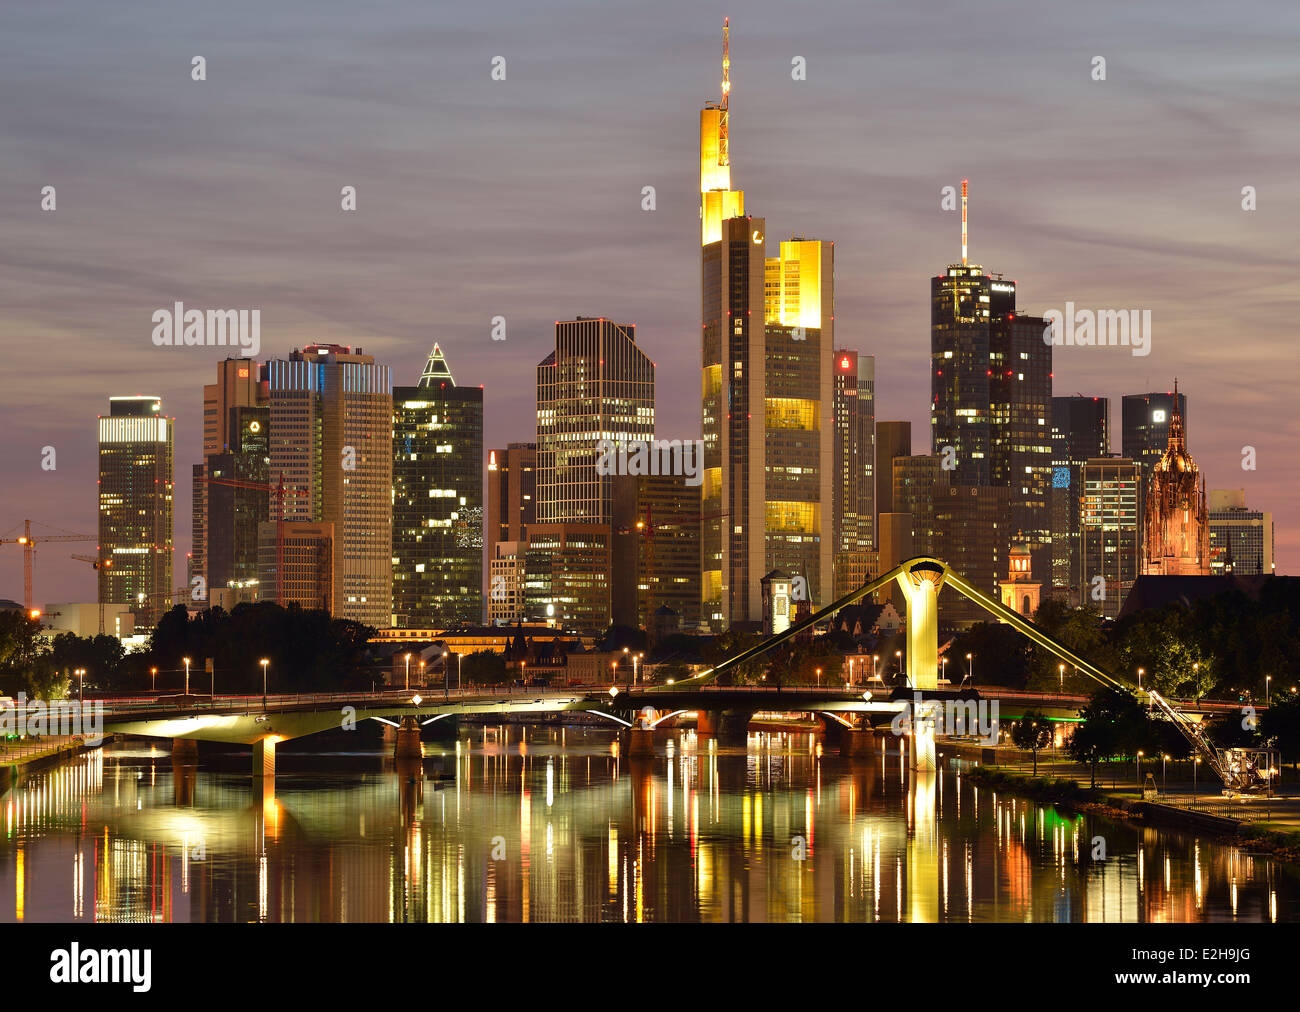 Skyline notturno, TaunusTurm, torre 185, Commerzbank, Messeturm, BCE, Banca centrale europea, la Helaba, Landesbank Hessen Foto Stock